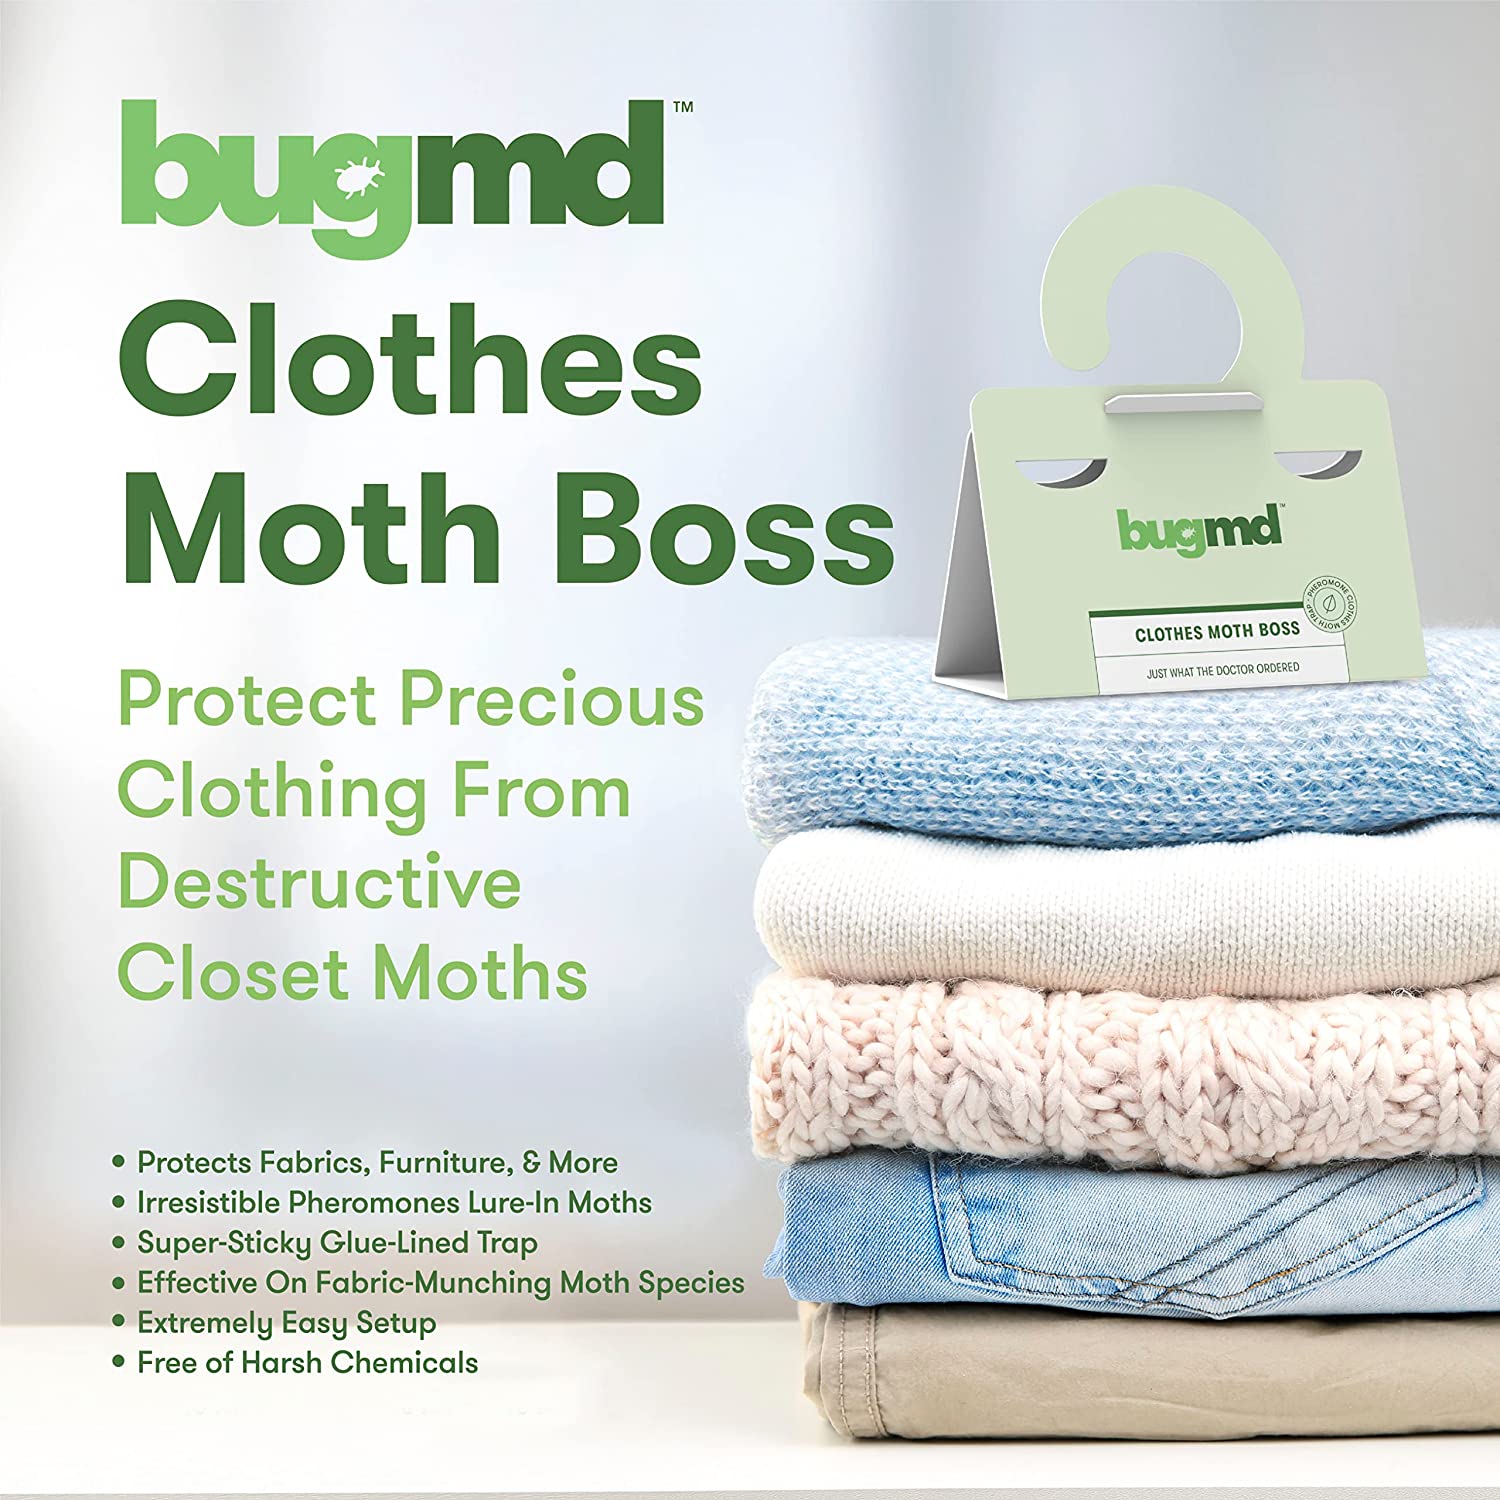 BugMD Clothes Moth Boss Trap